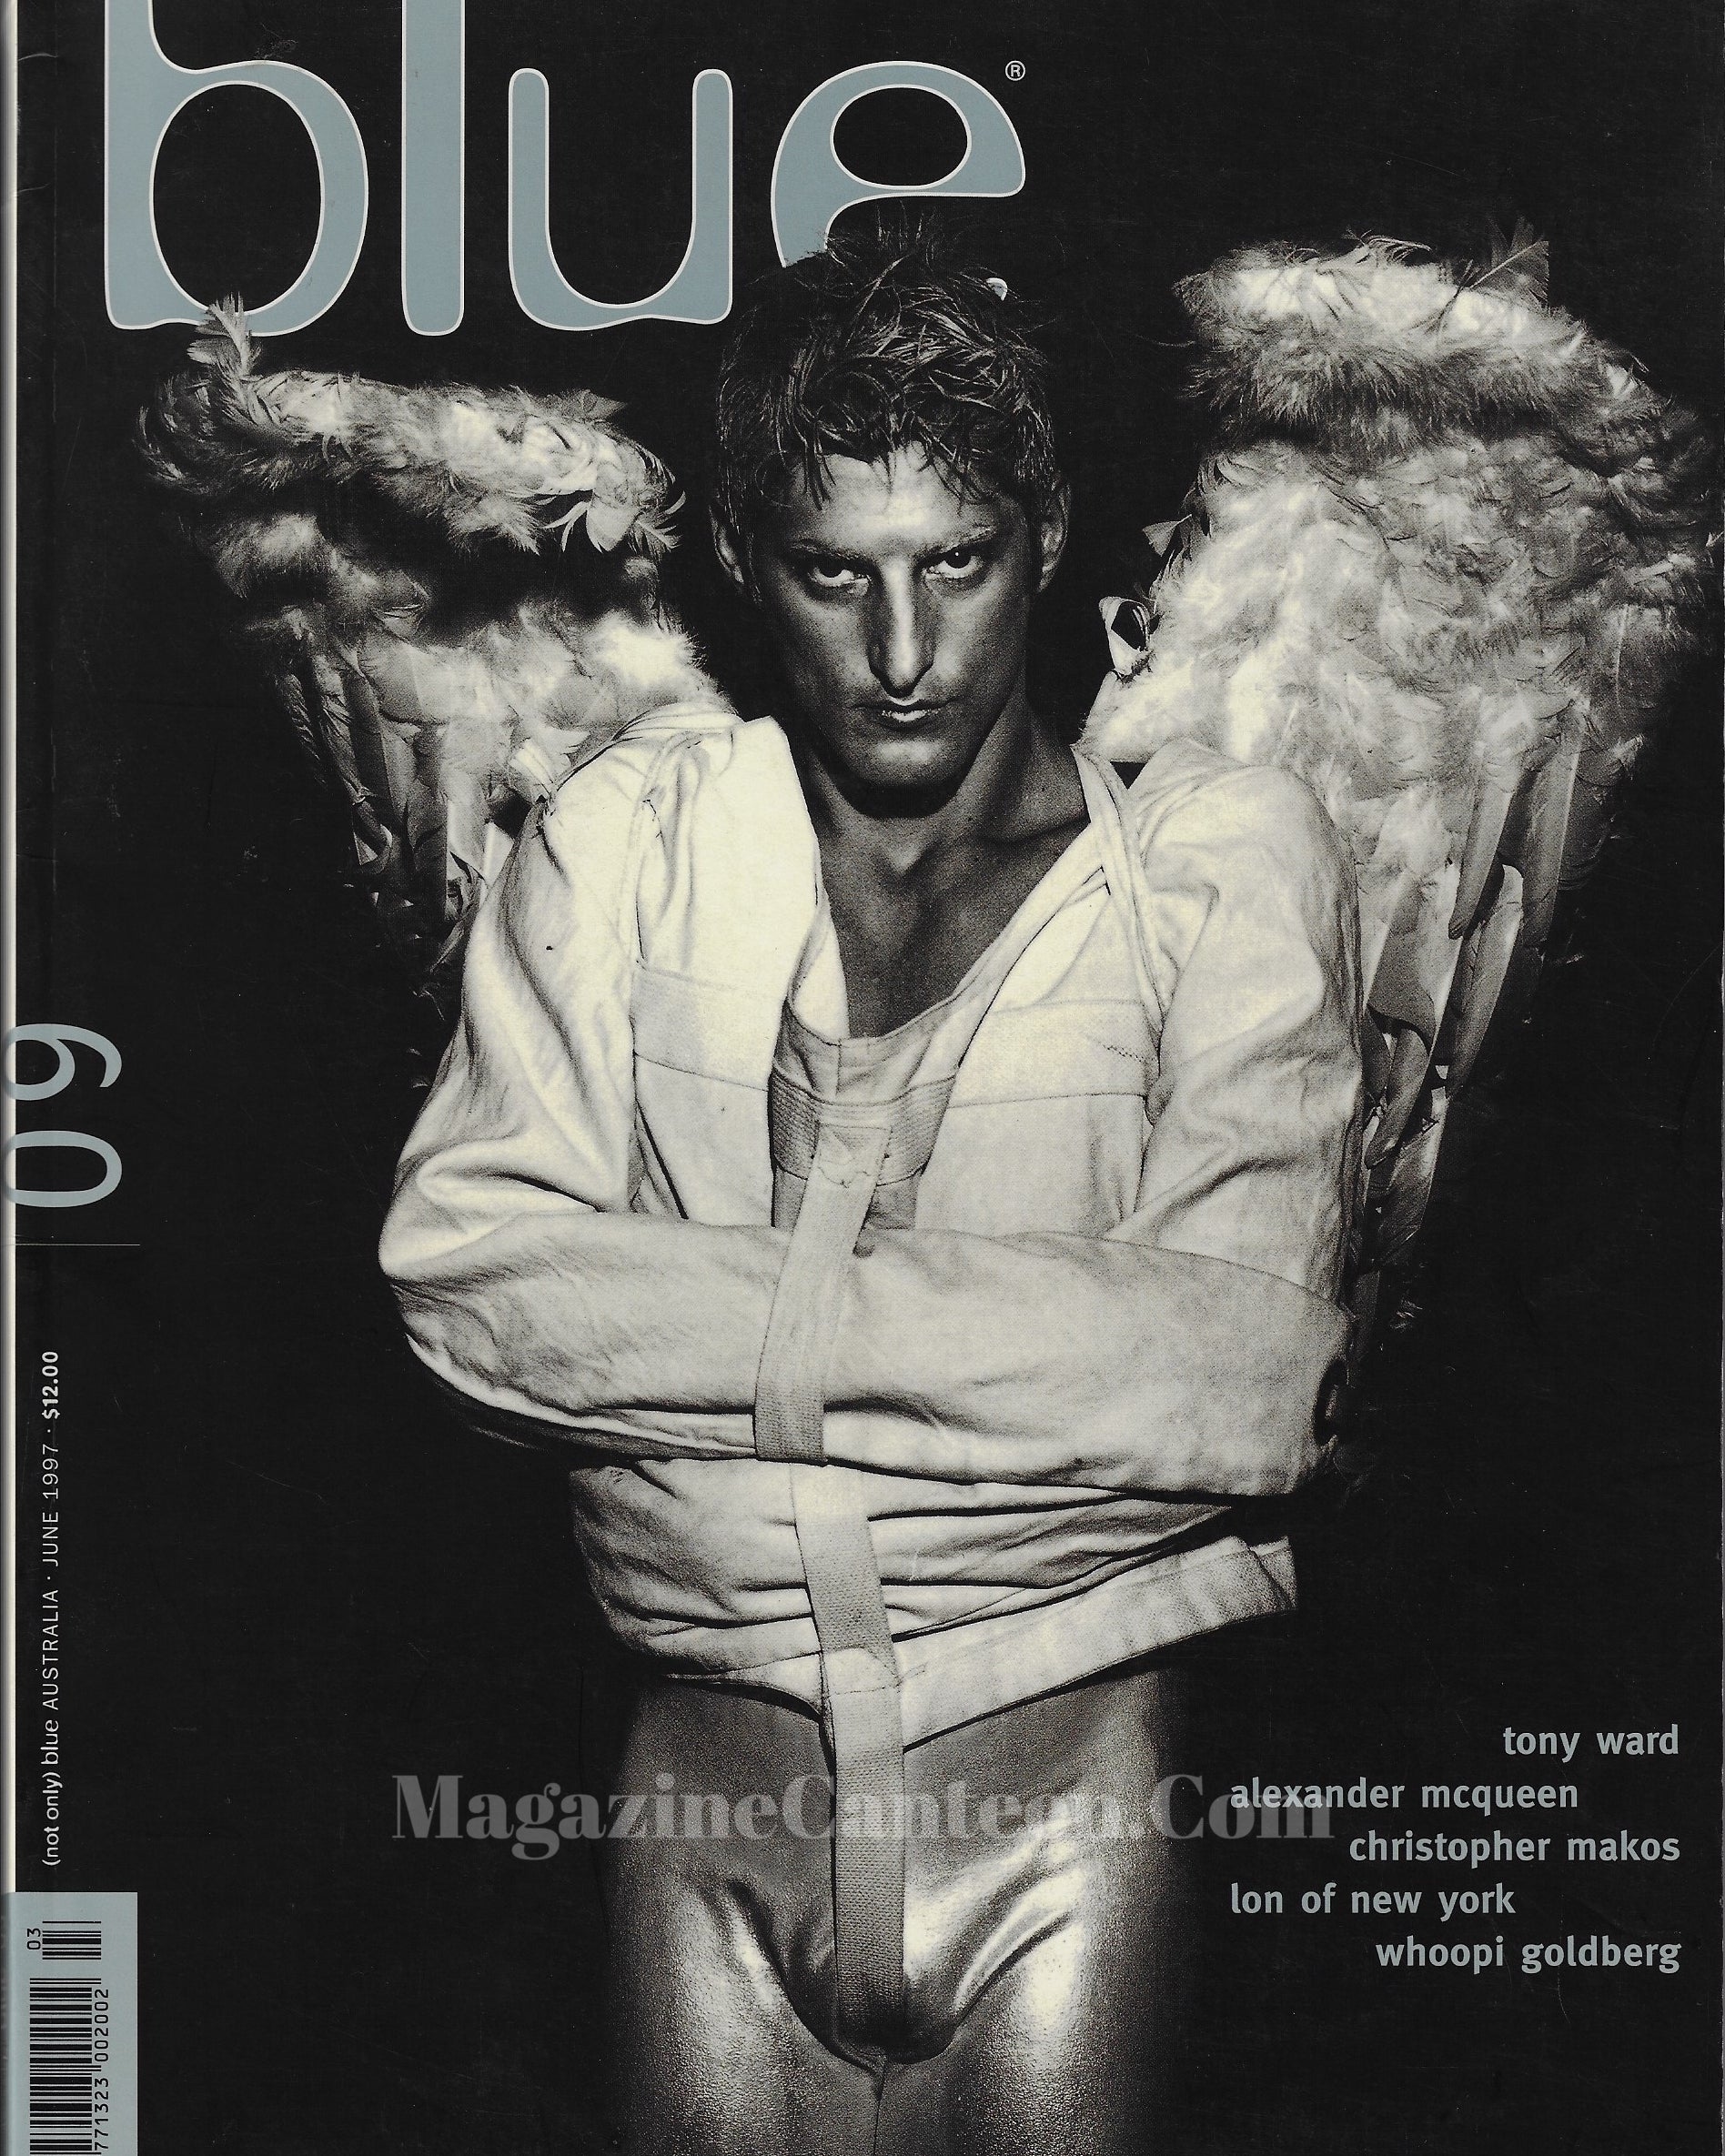 Not Only Blue Magazine 09 - Tony Ward